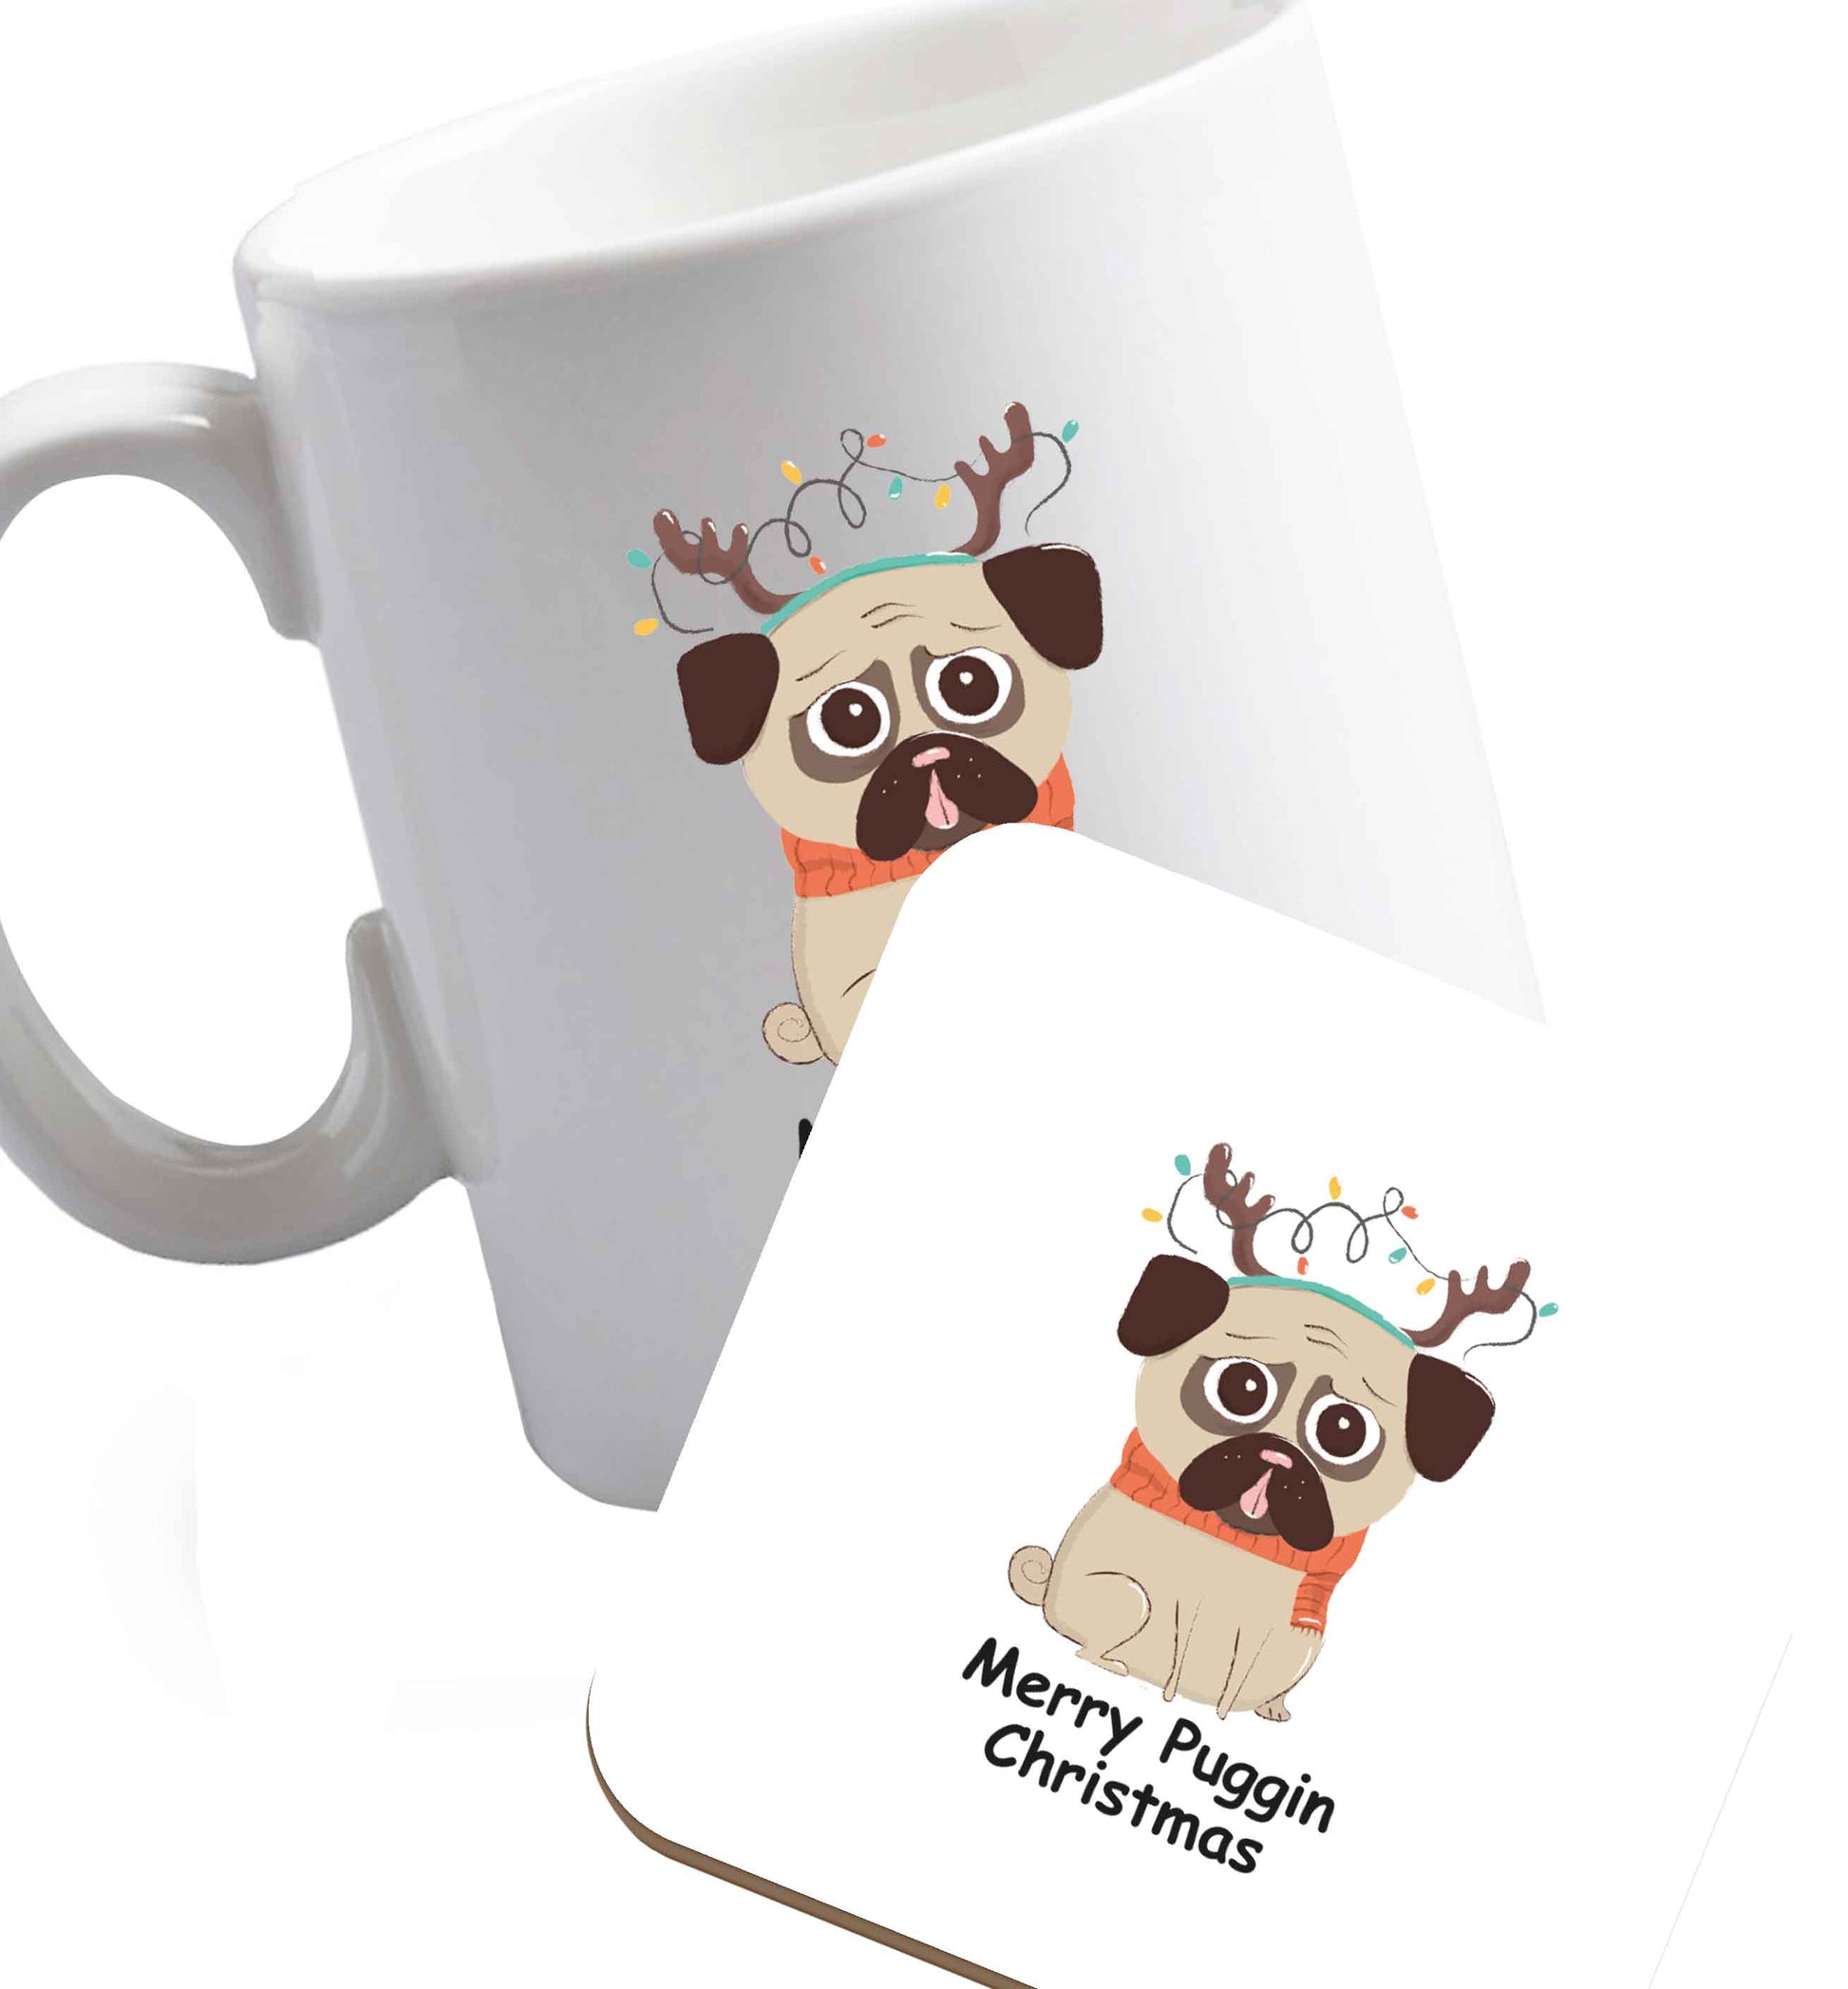 10 oz Merry puggin' Chirstmas ceramic mug and coaster set right handed